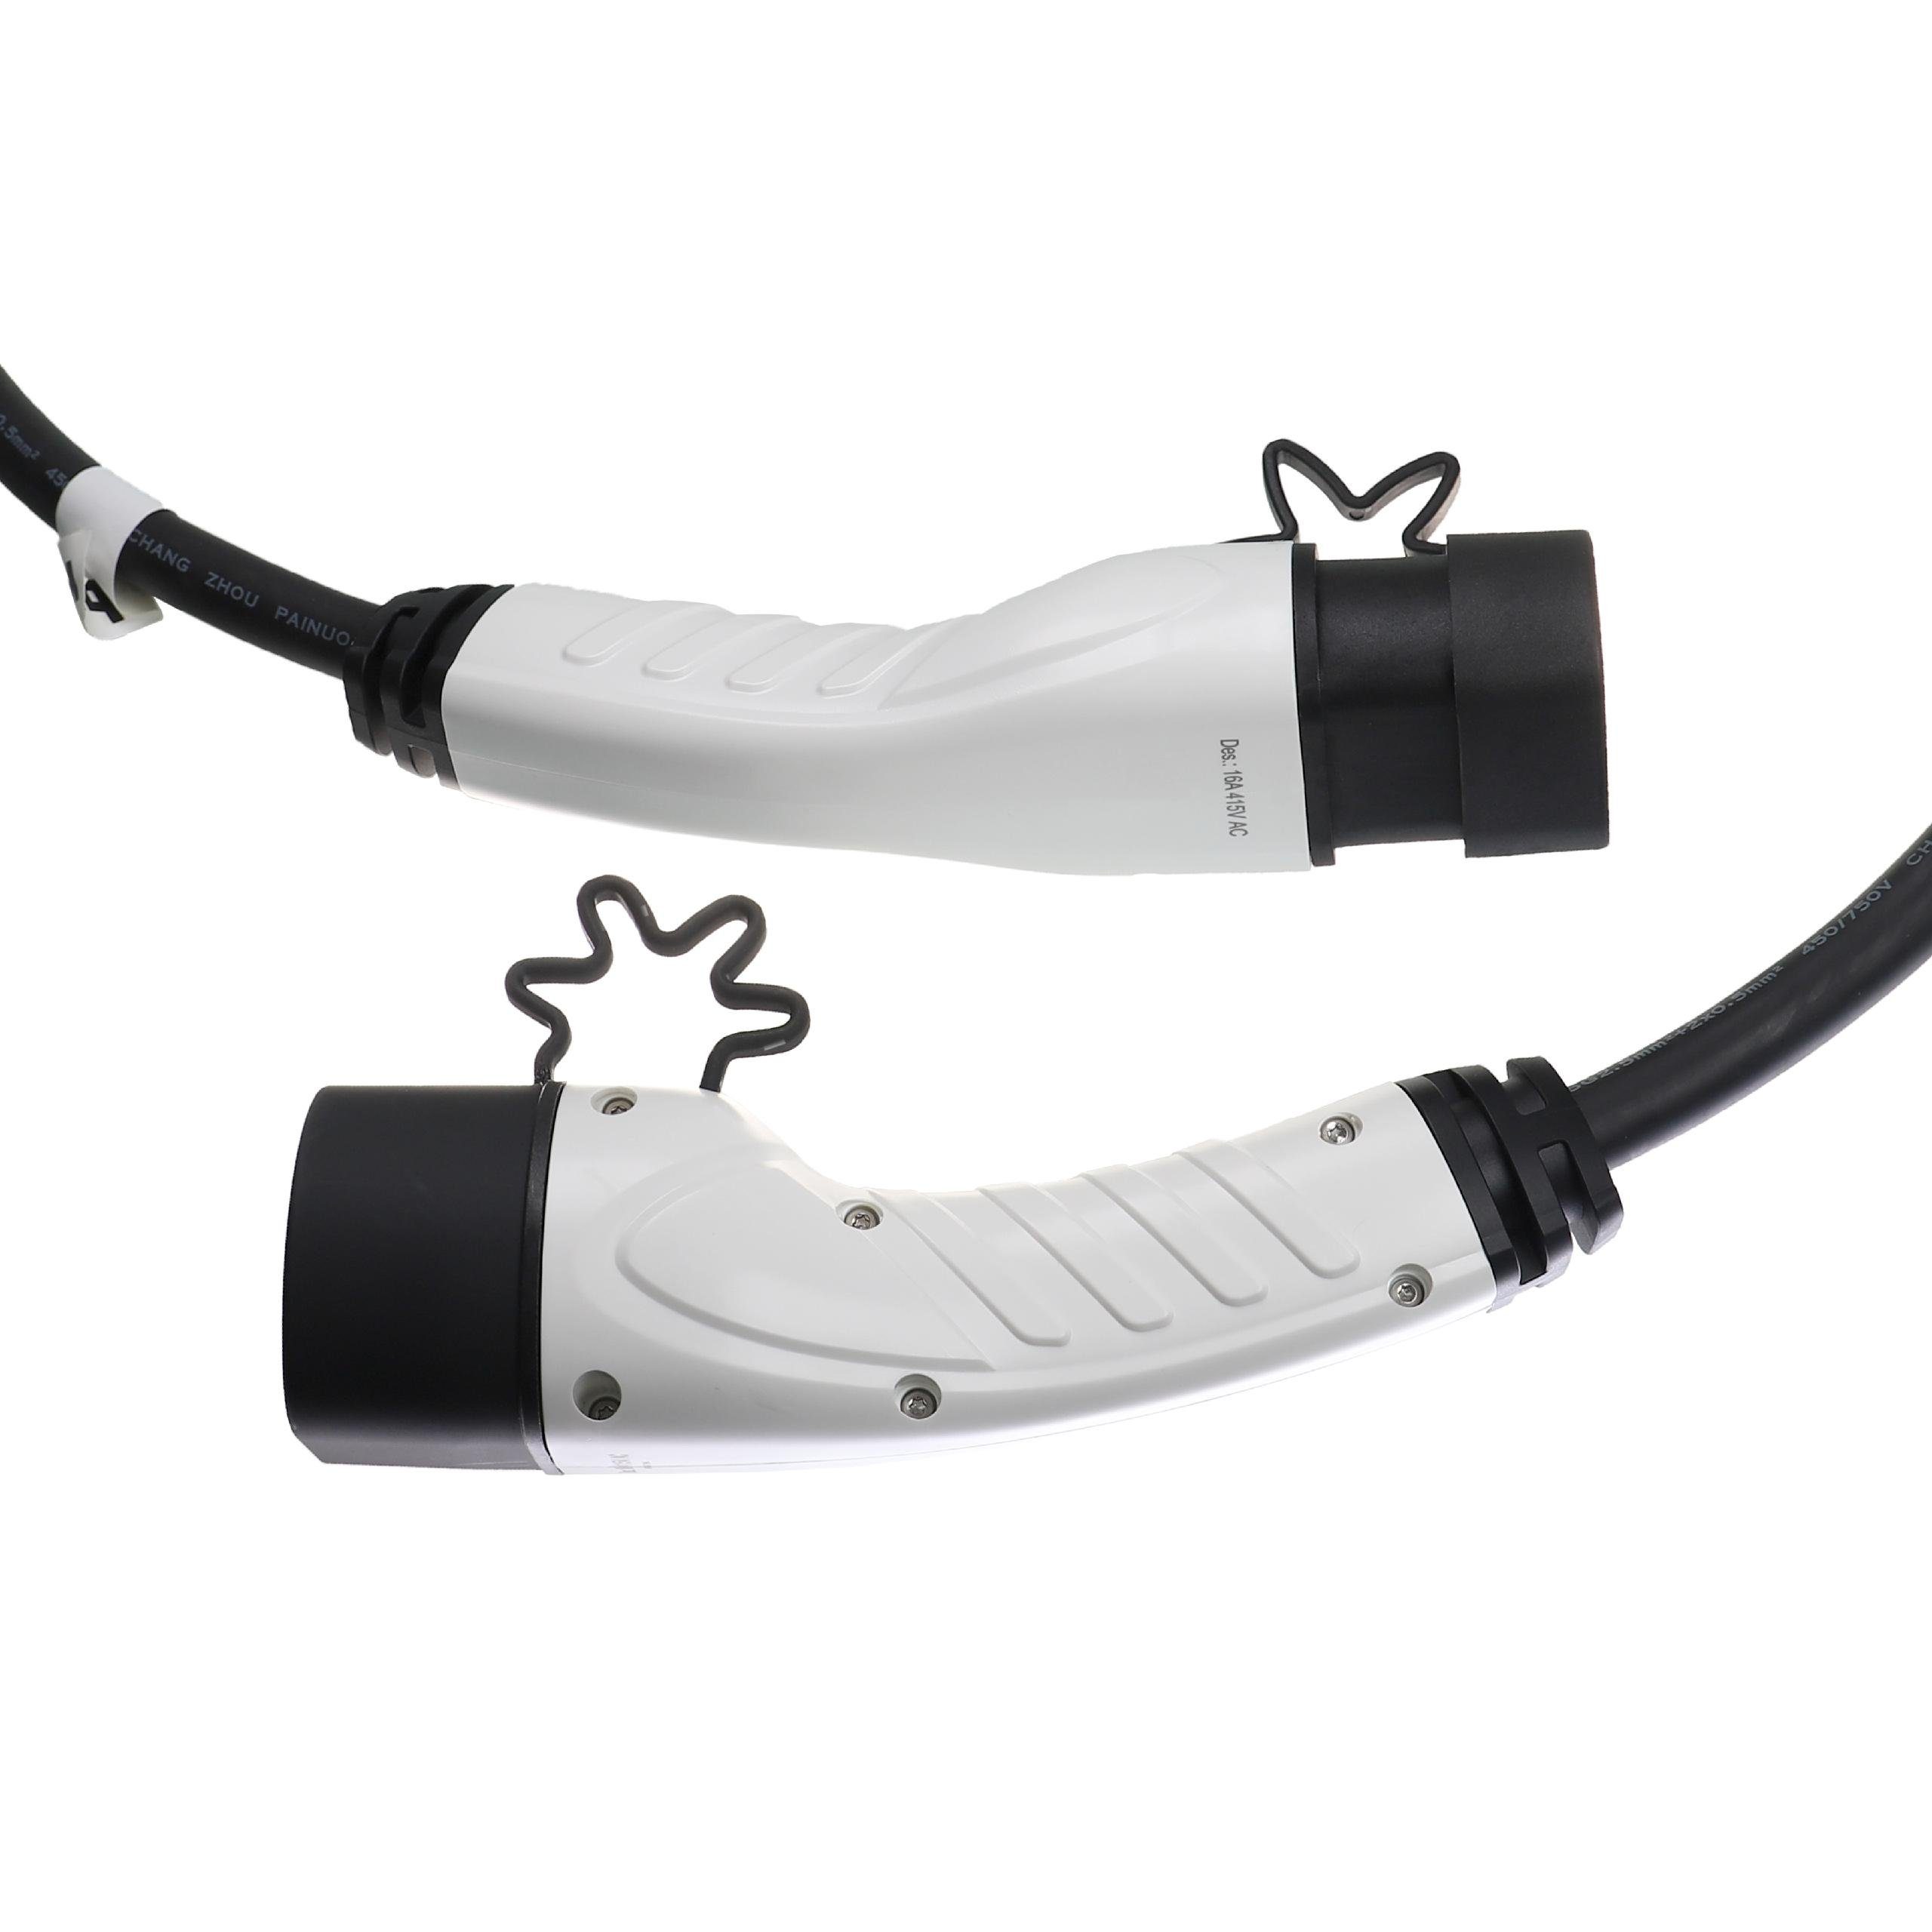 Peugeot passend e-Rifter / Elektro-Kabel e-Traveller, Elektroauto vhbw für Plug-in-Hybrid